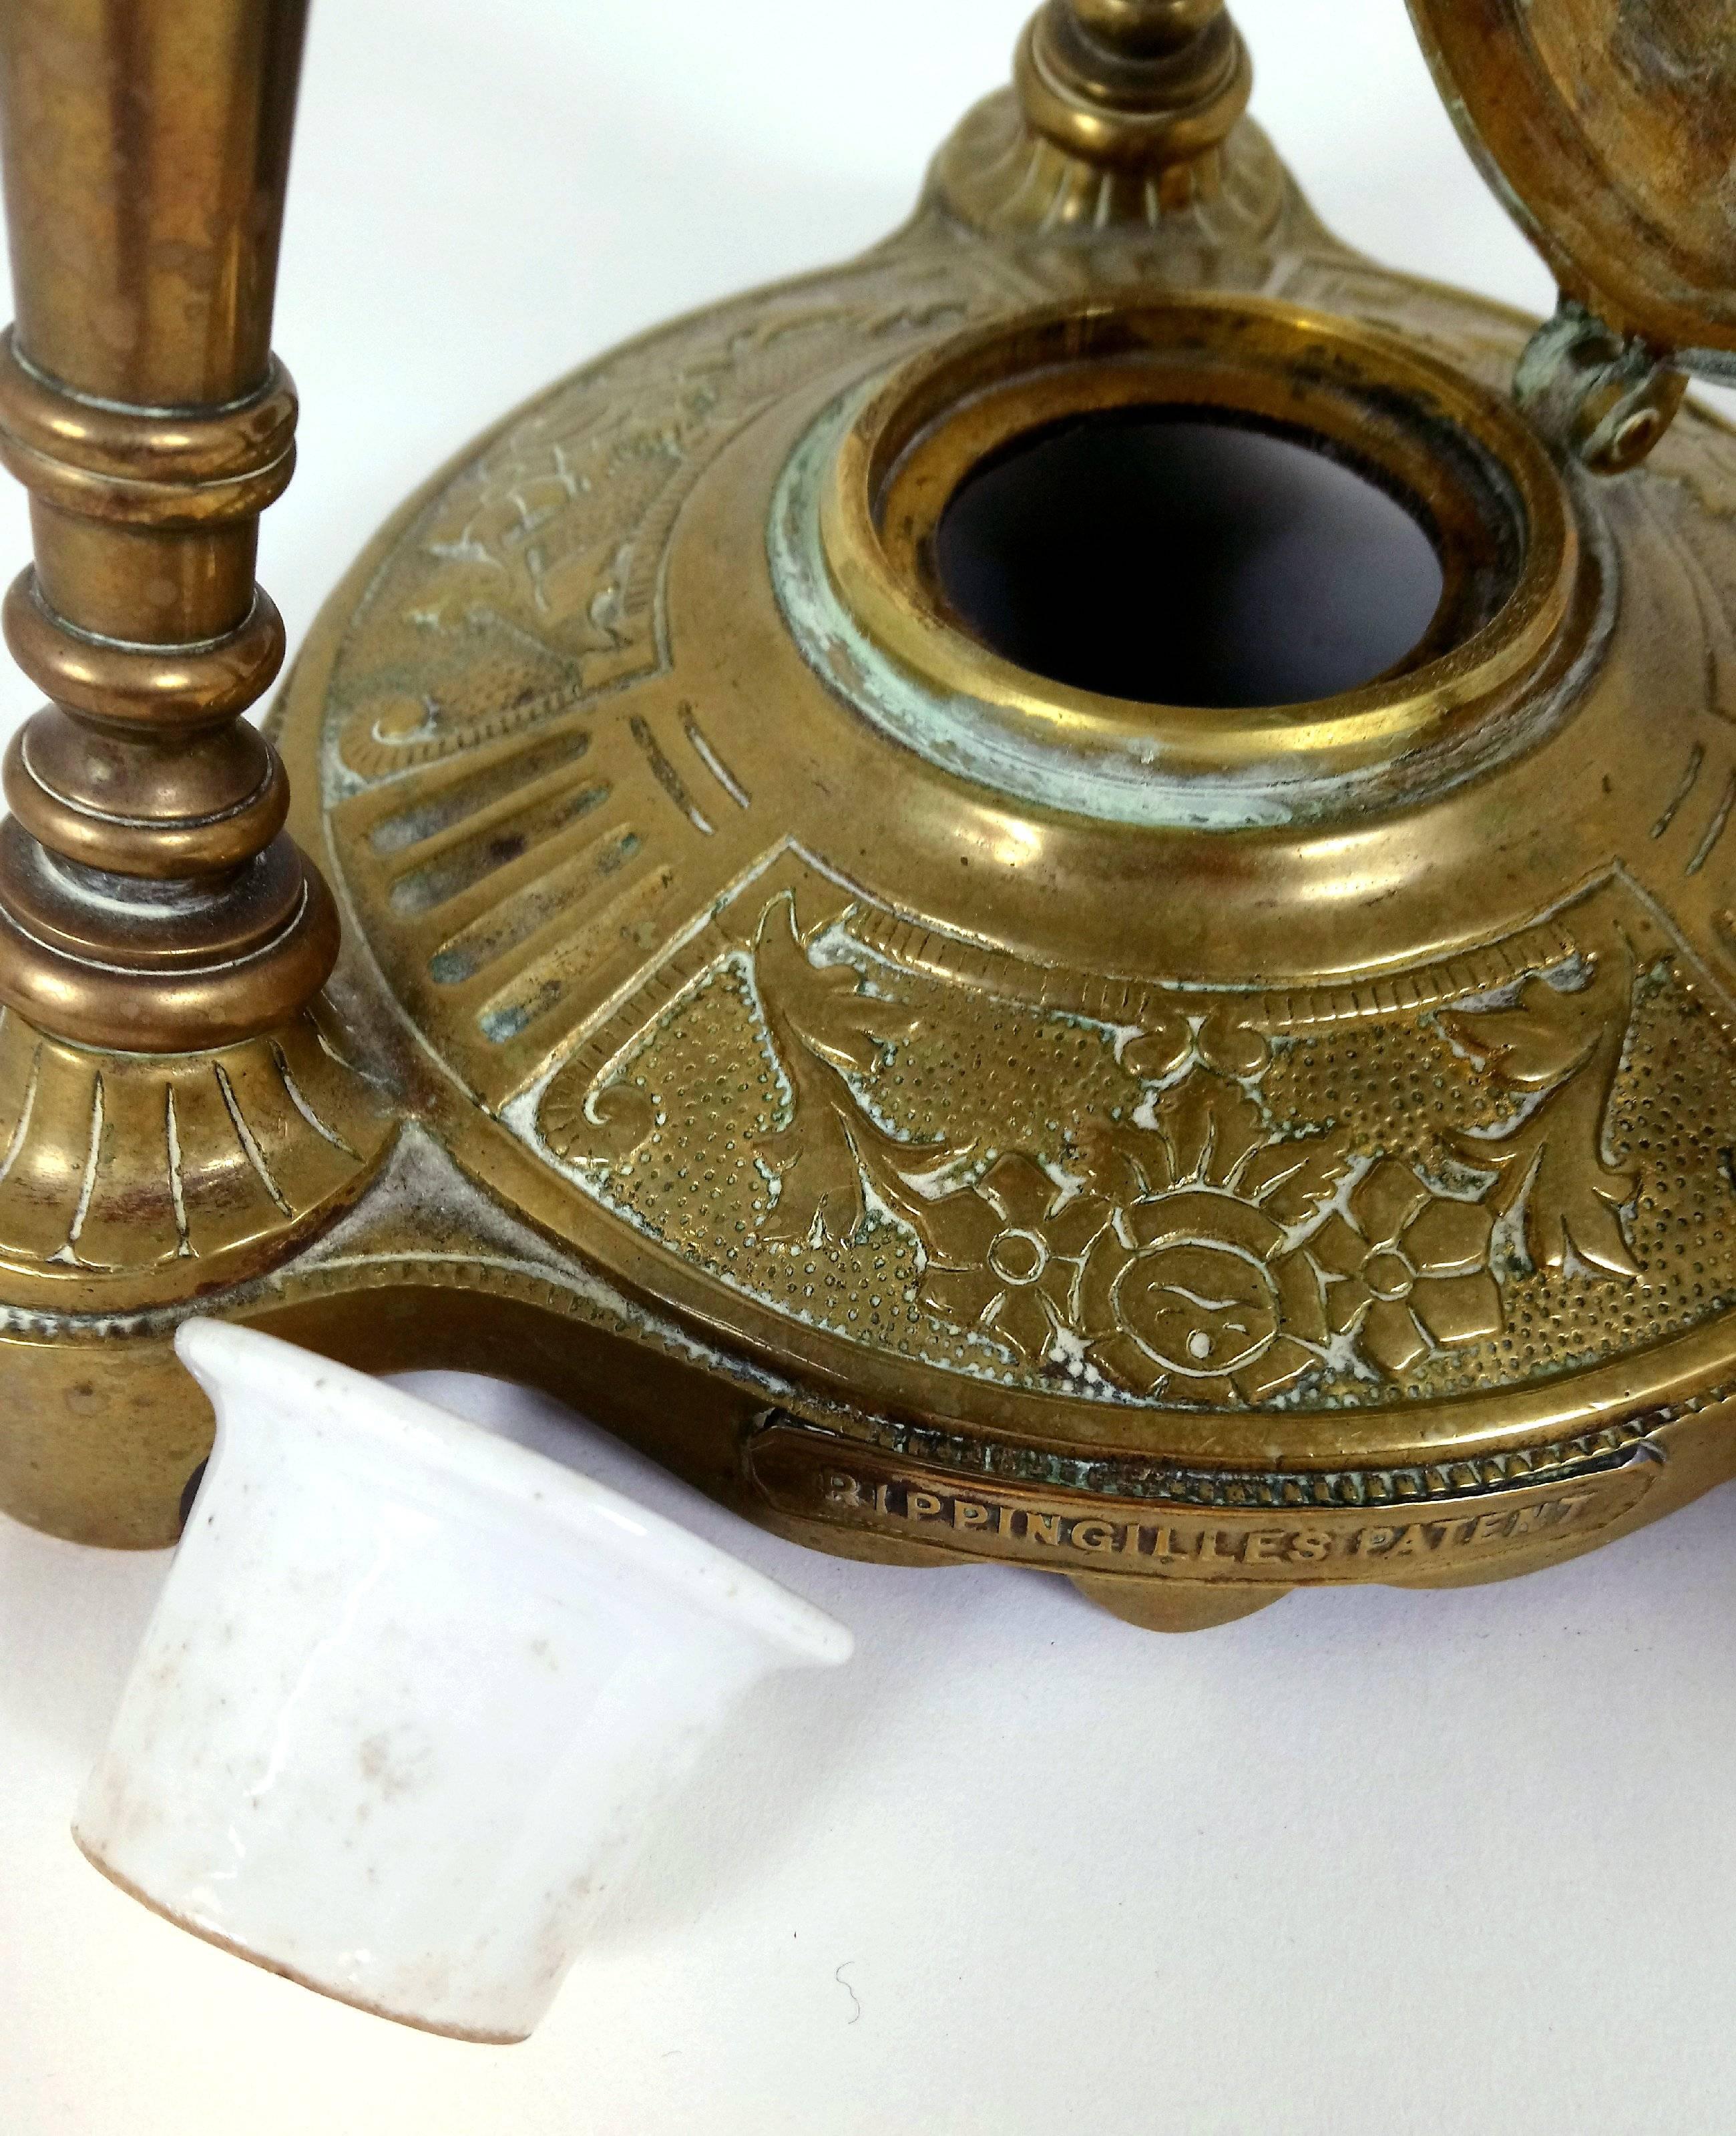 19th Century Rippingilles Patent Brass Oil Lamp 1